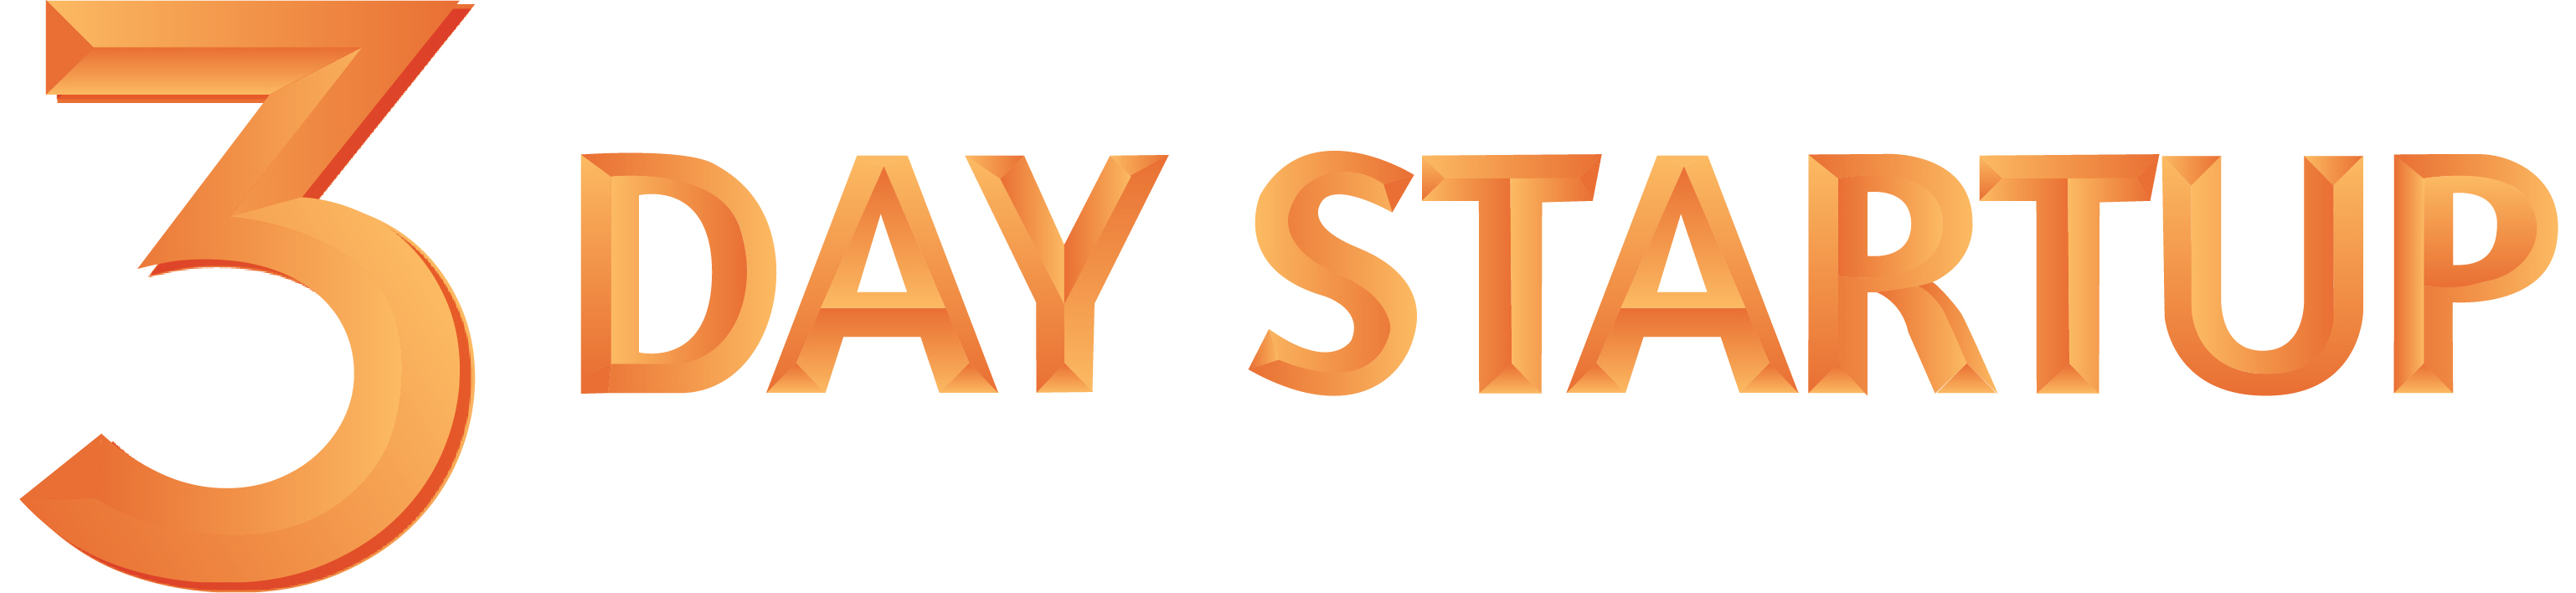 3 Day Startup Logo